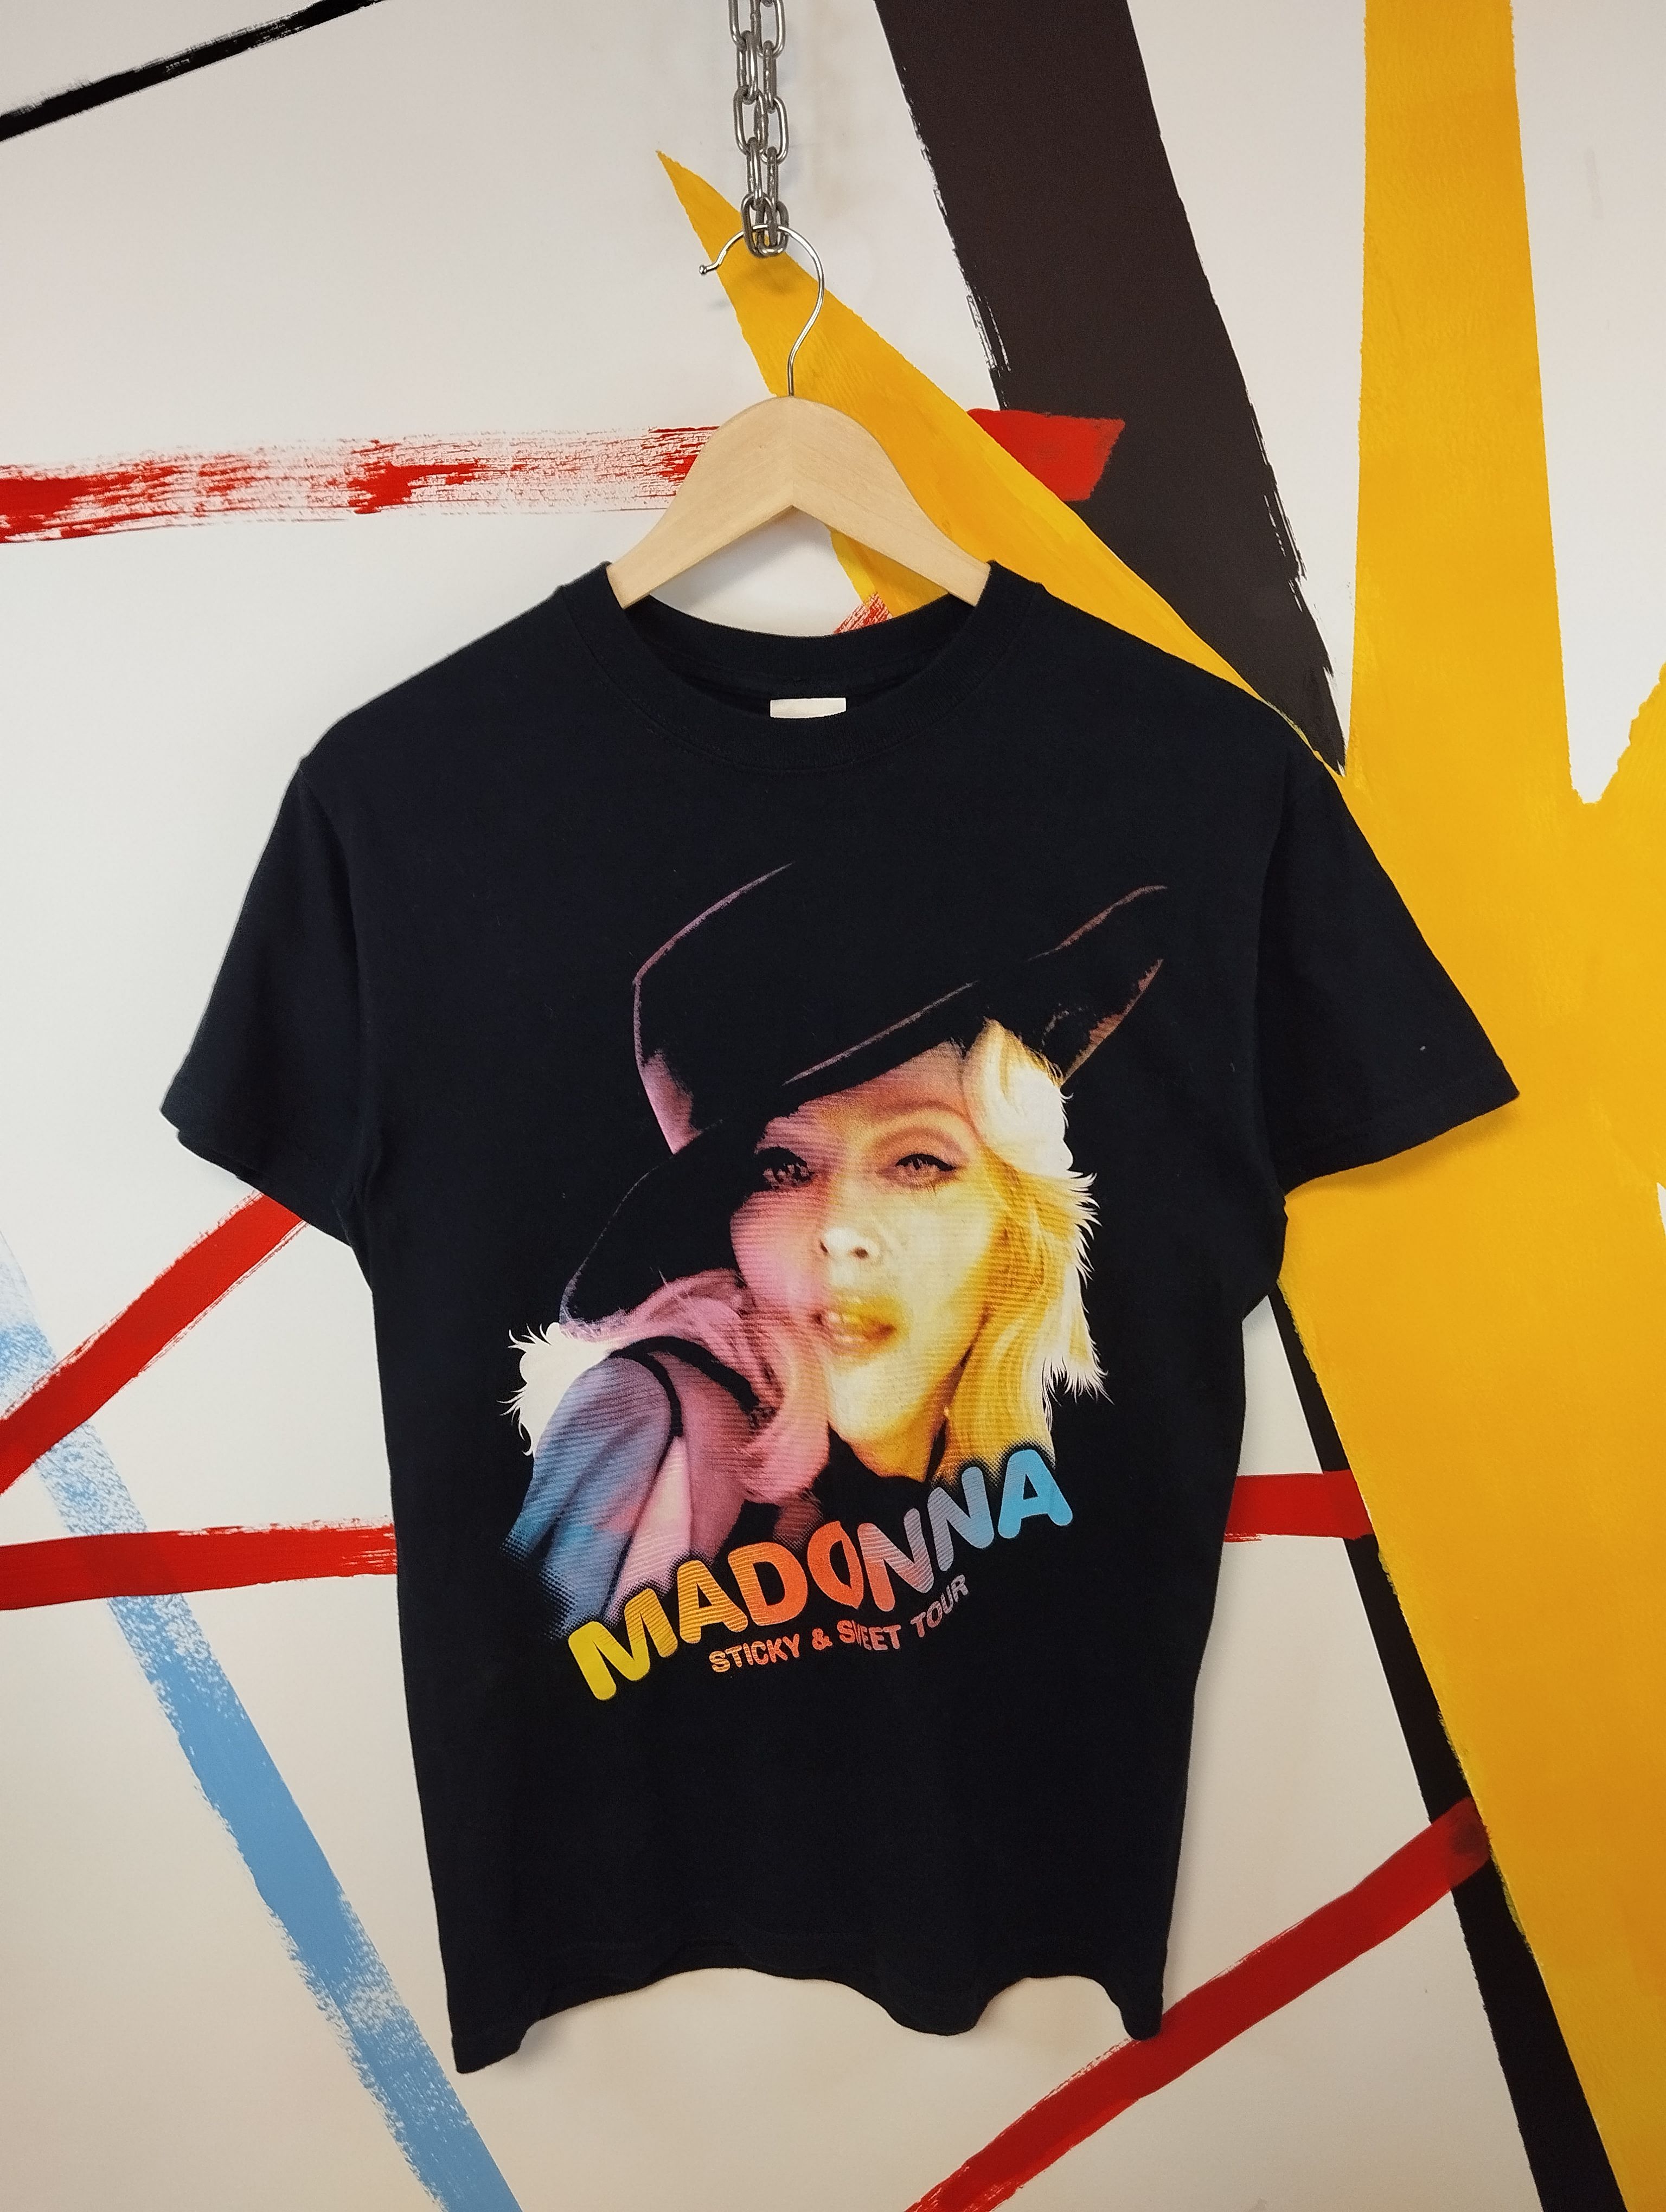 Vintage Madonna 2009 Sticky&Sweet Tour t-shirt size s Size US S / EU 44-46 / 1 - 1 Preview